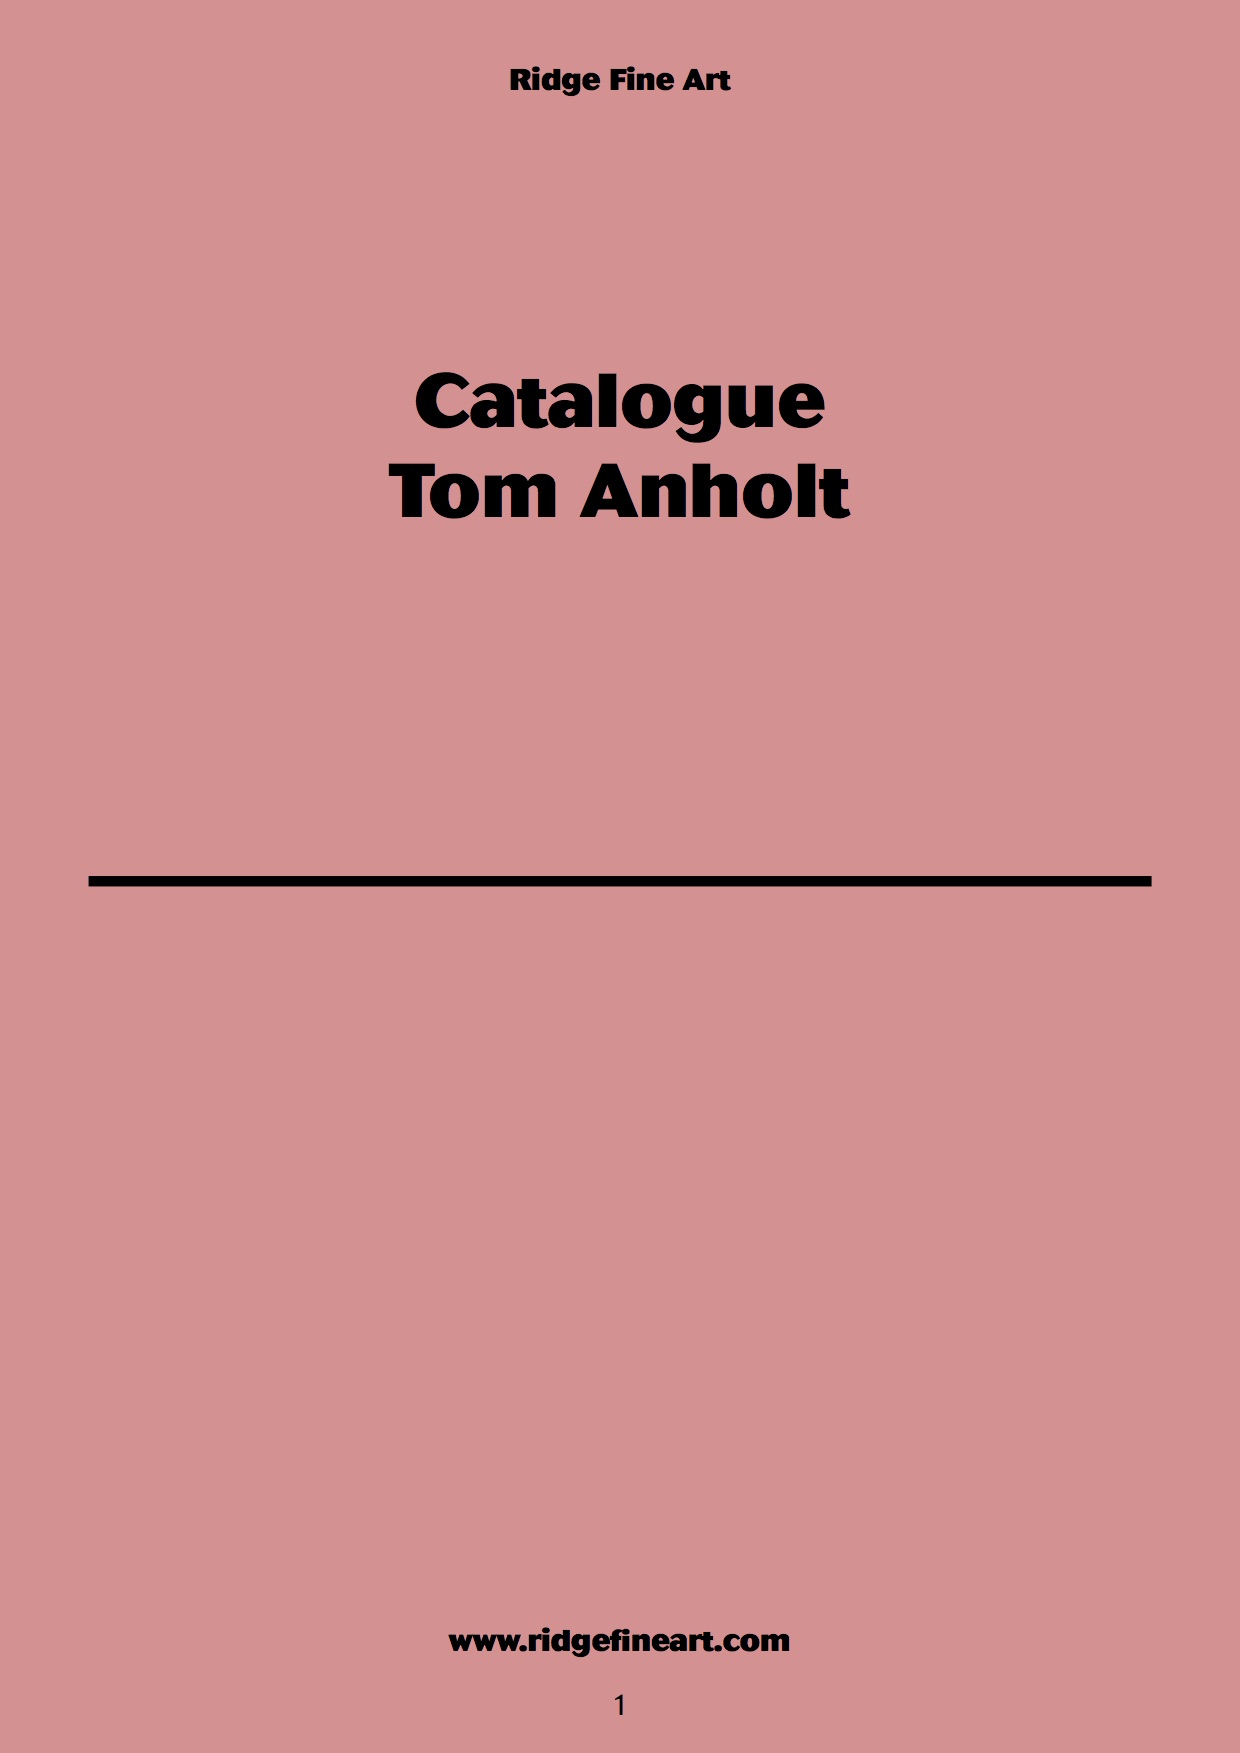 Catalogue Tom Anholt | Ridge Fine Art